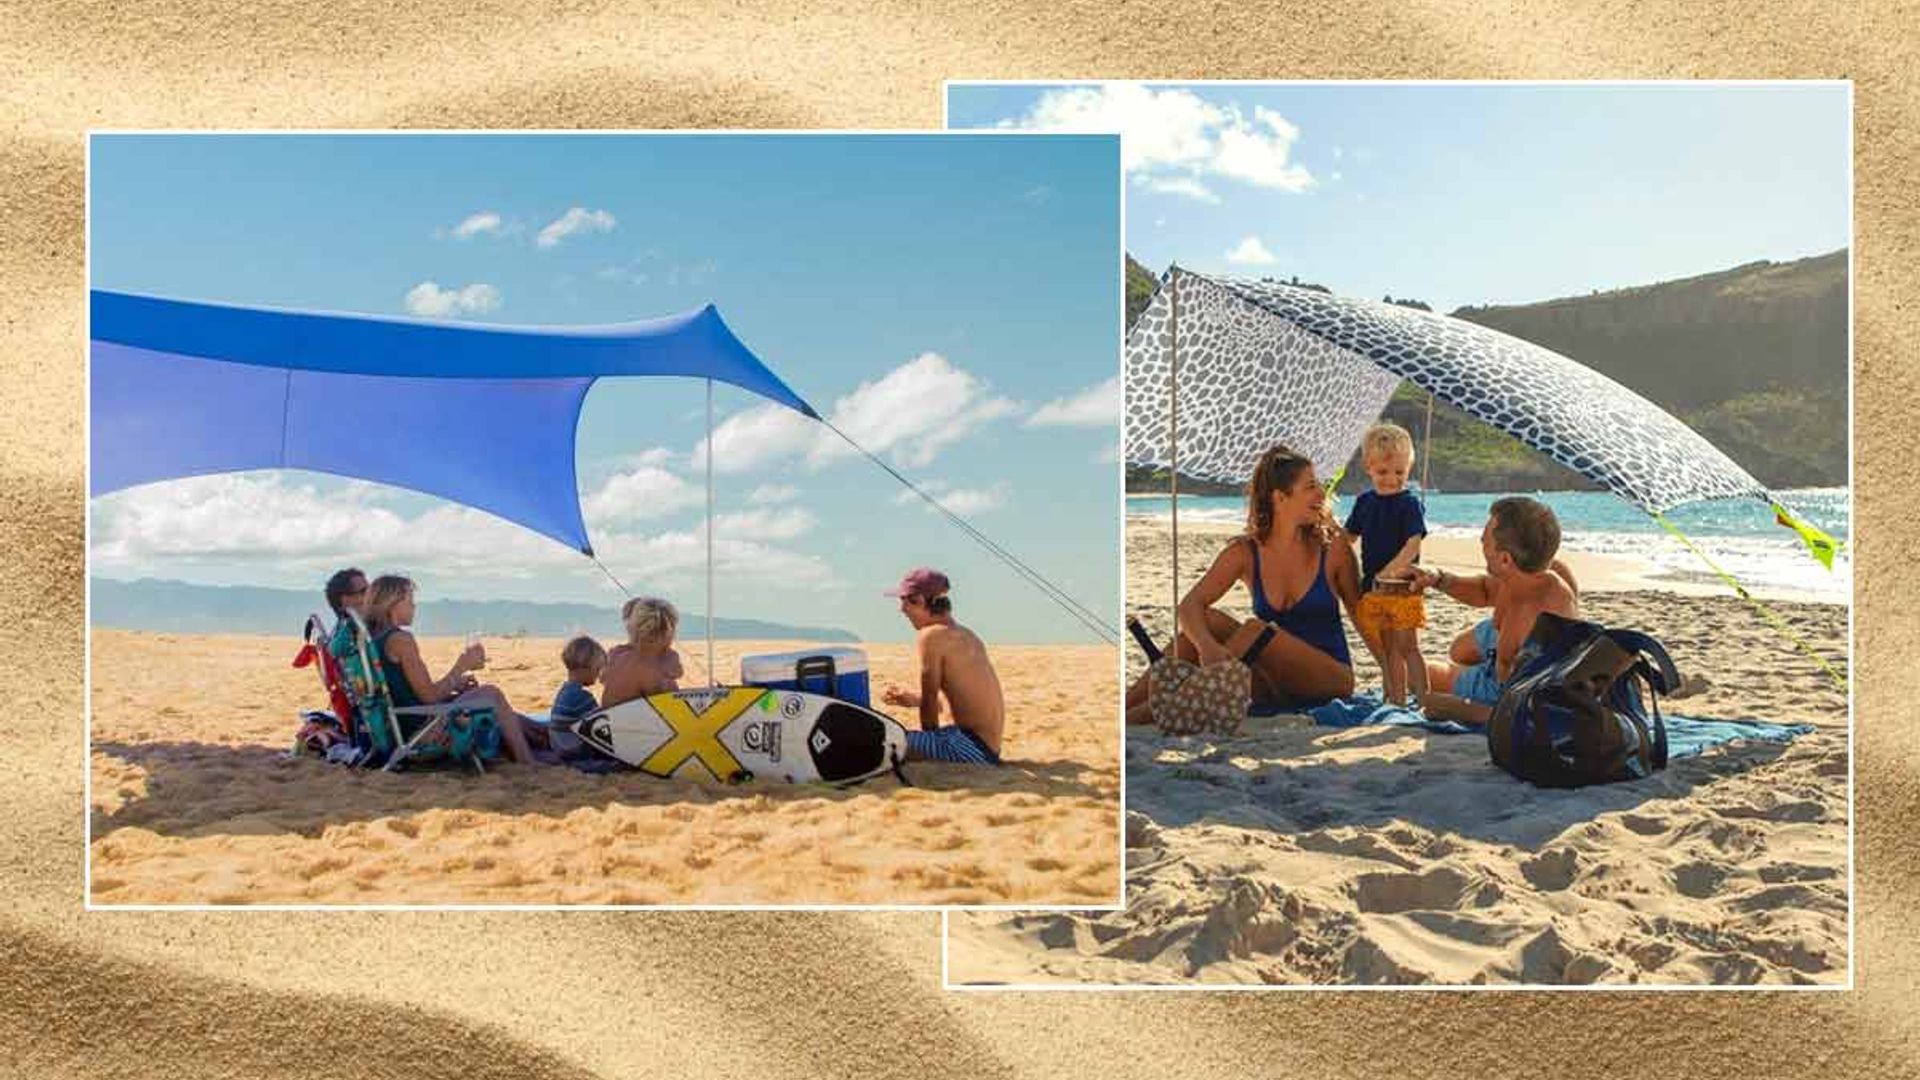 Beach Umbrella Sun Tent Family Pool Camping Sport Shelter Canopy XL Outdoor Blue 